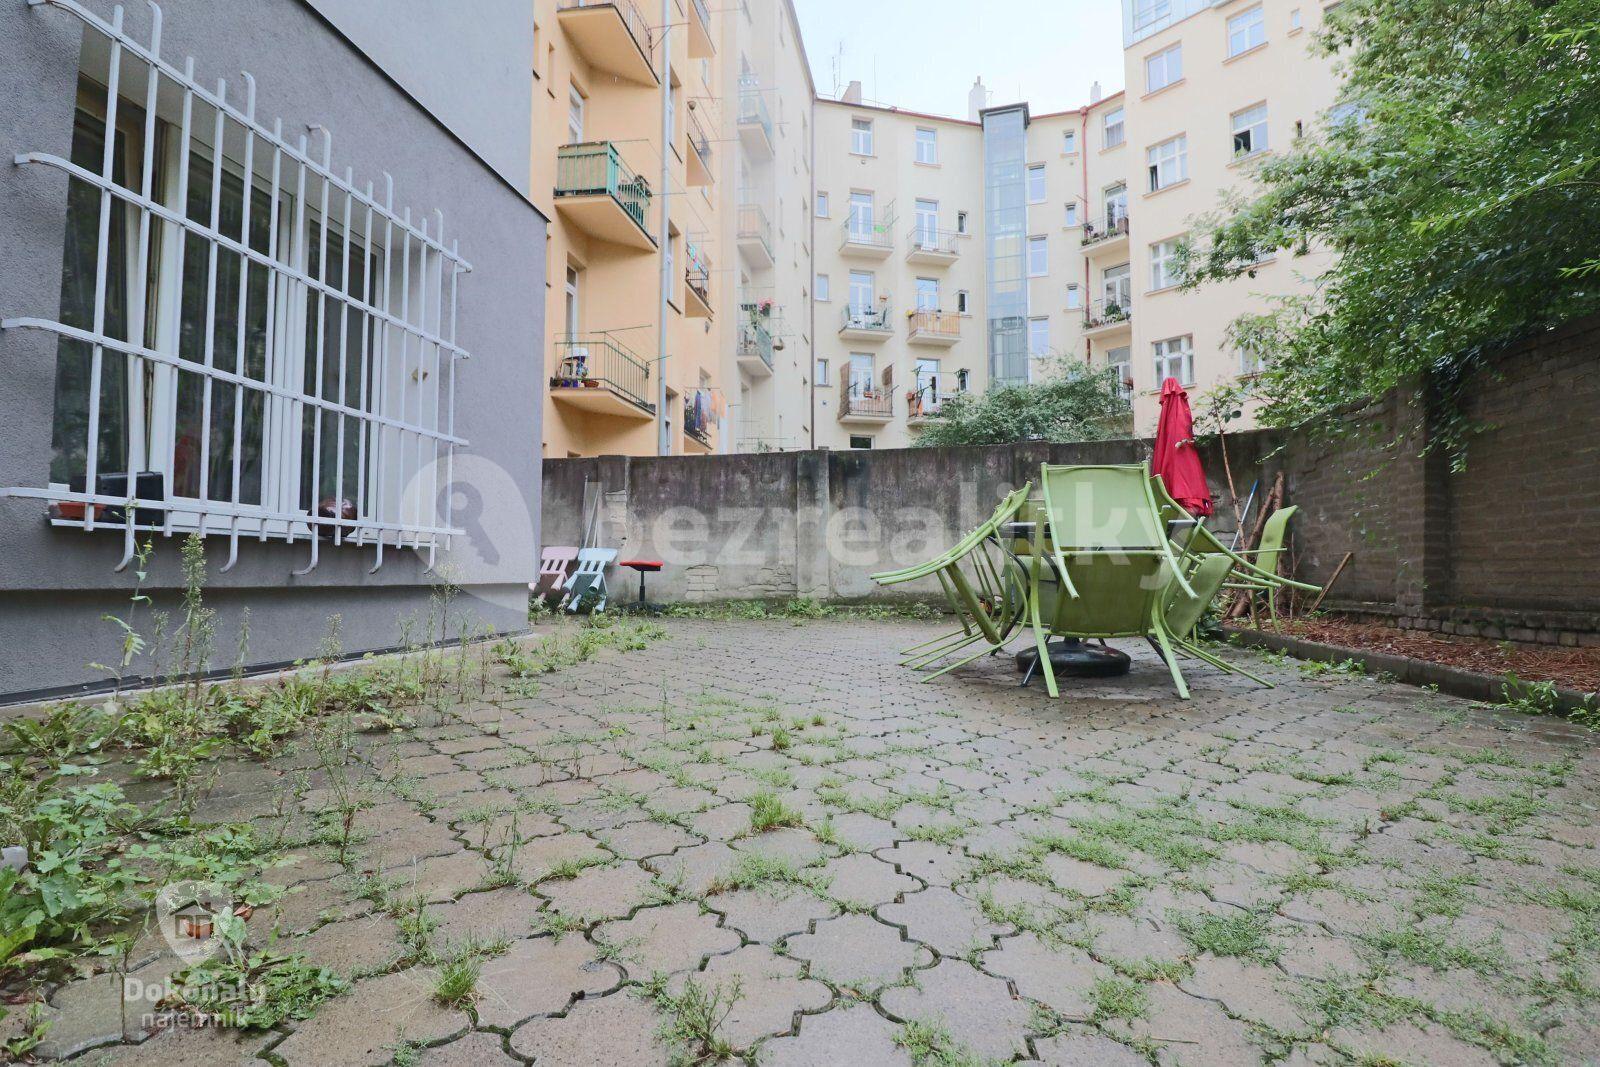 2 bedroom with open-plan kitchen flat to rent, 66 m², Na Zlatnici, Prague, Prague